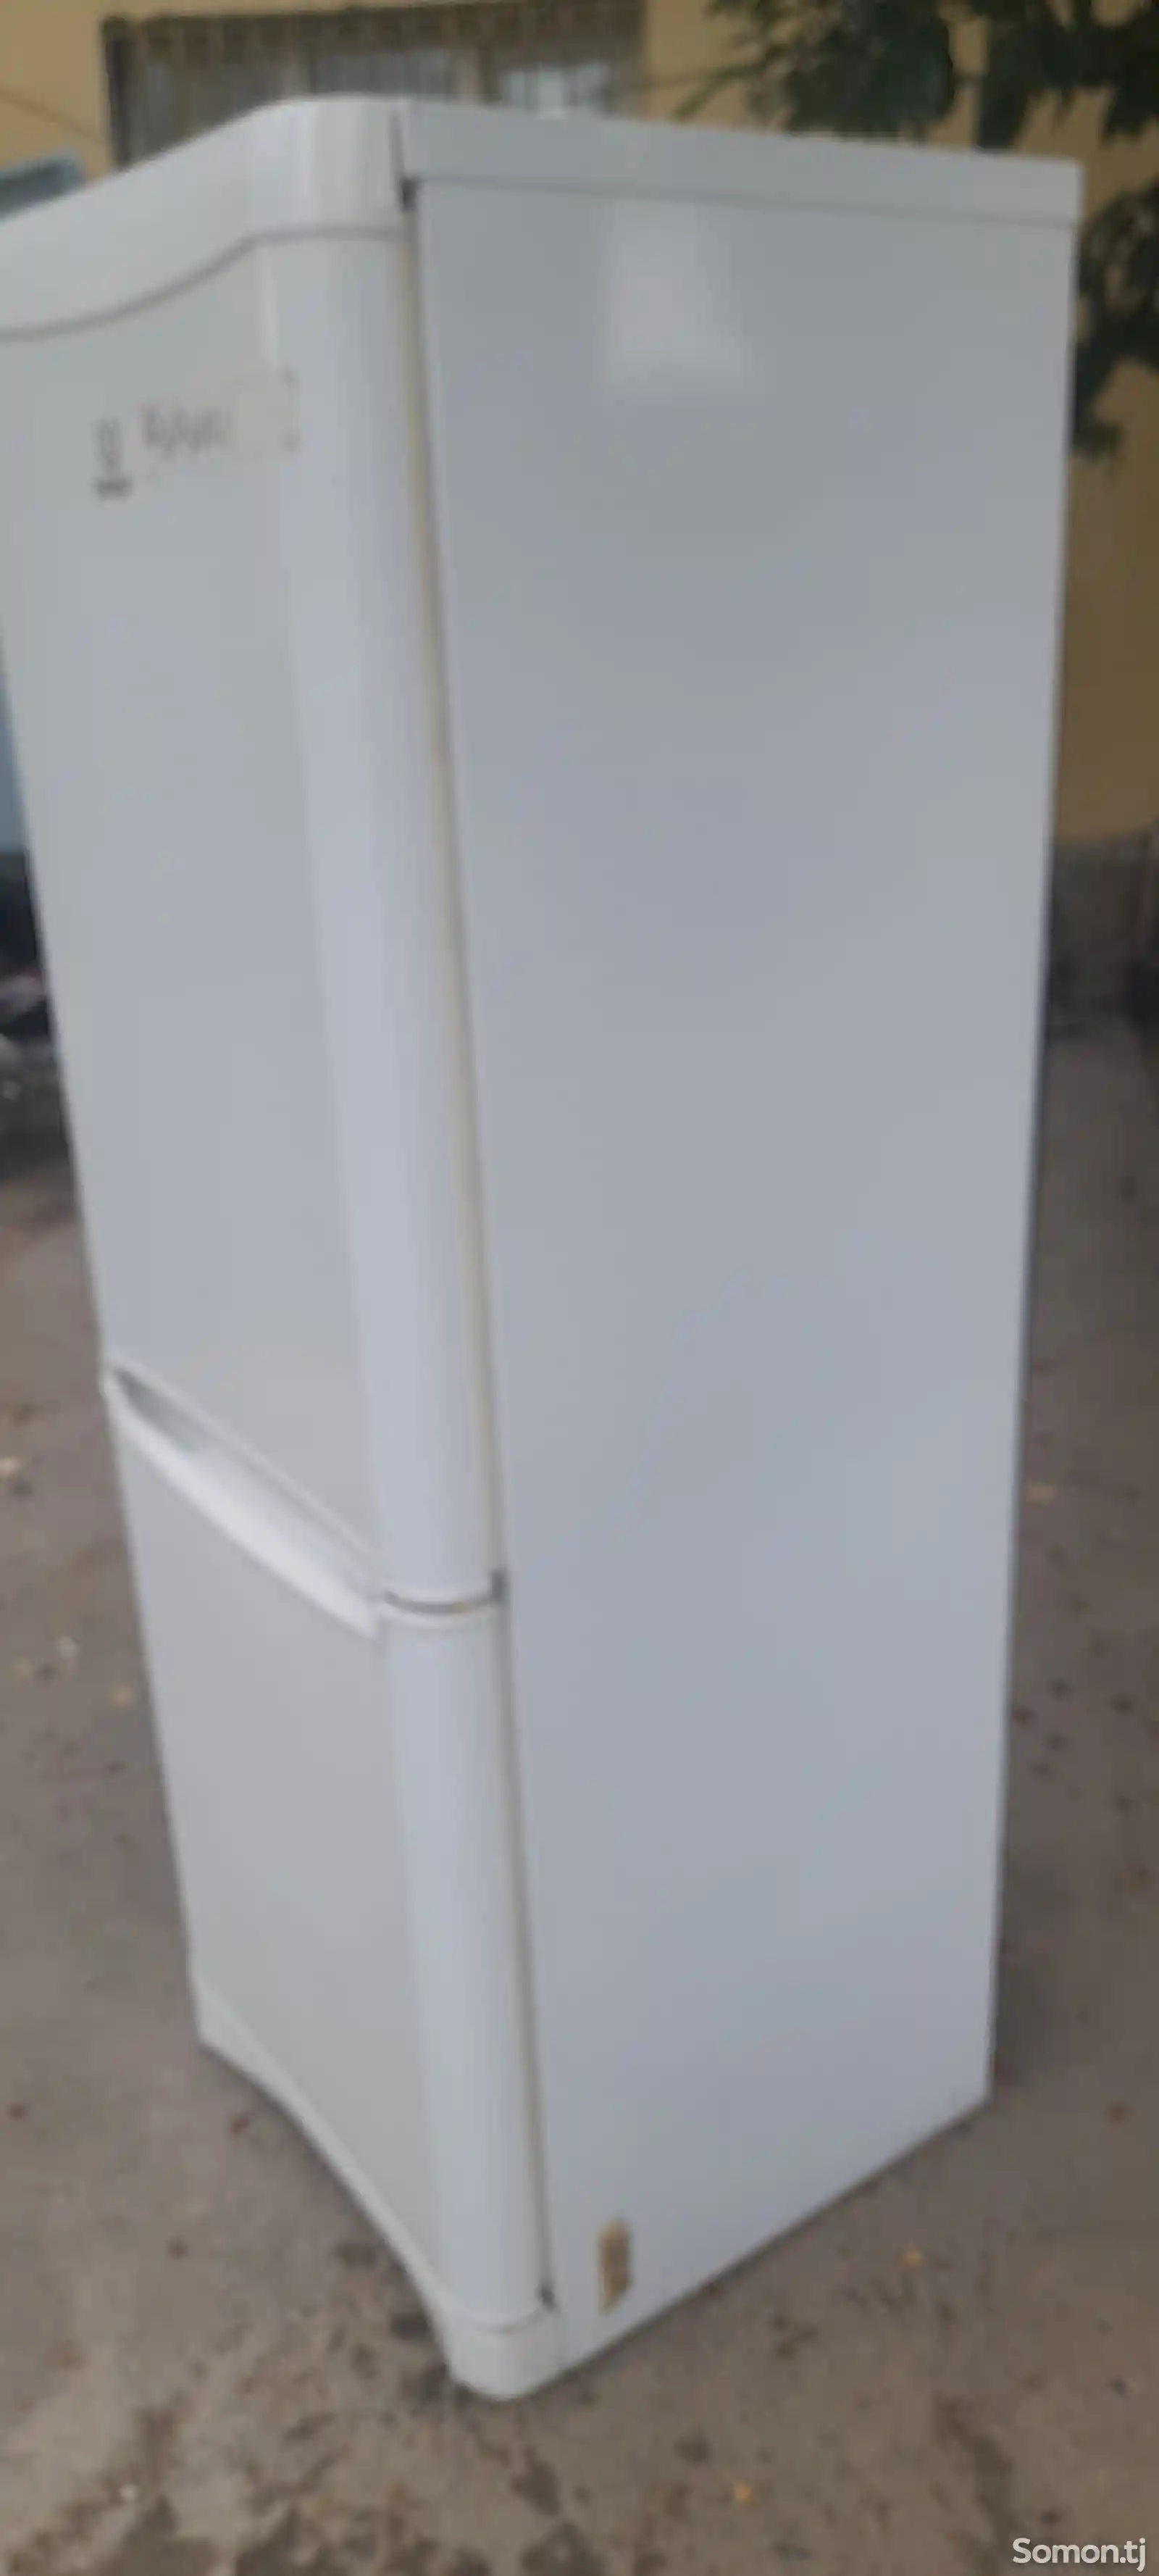 Холодильник индезит 167 см-3